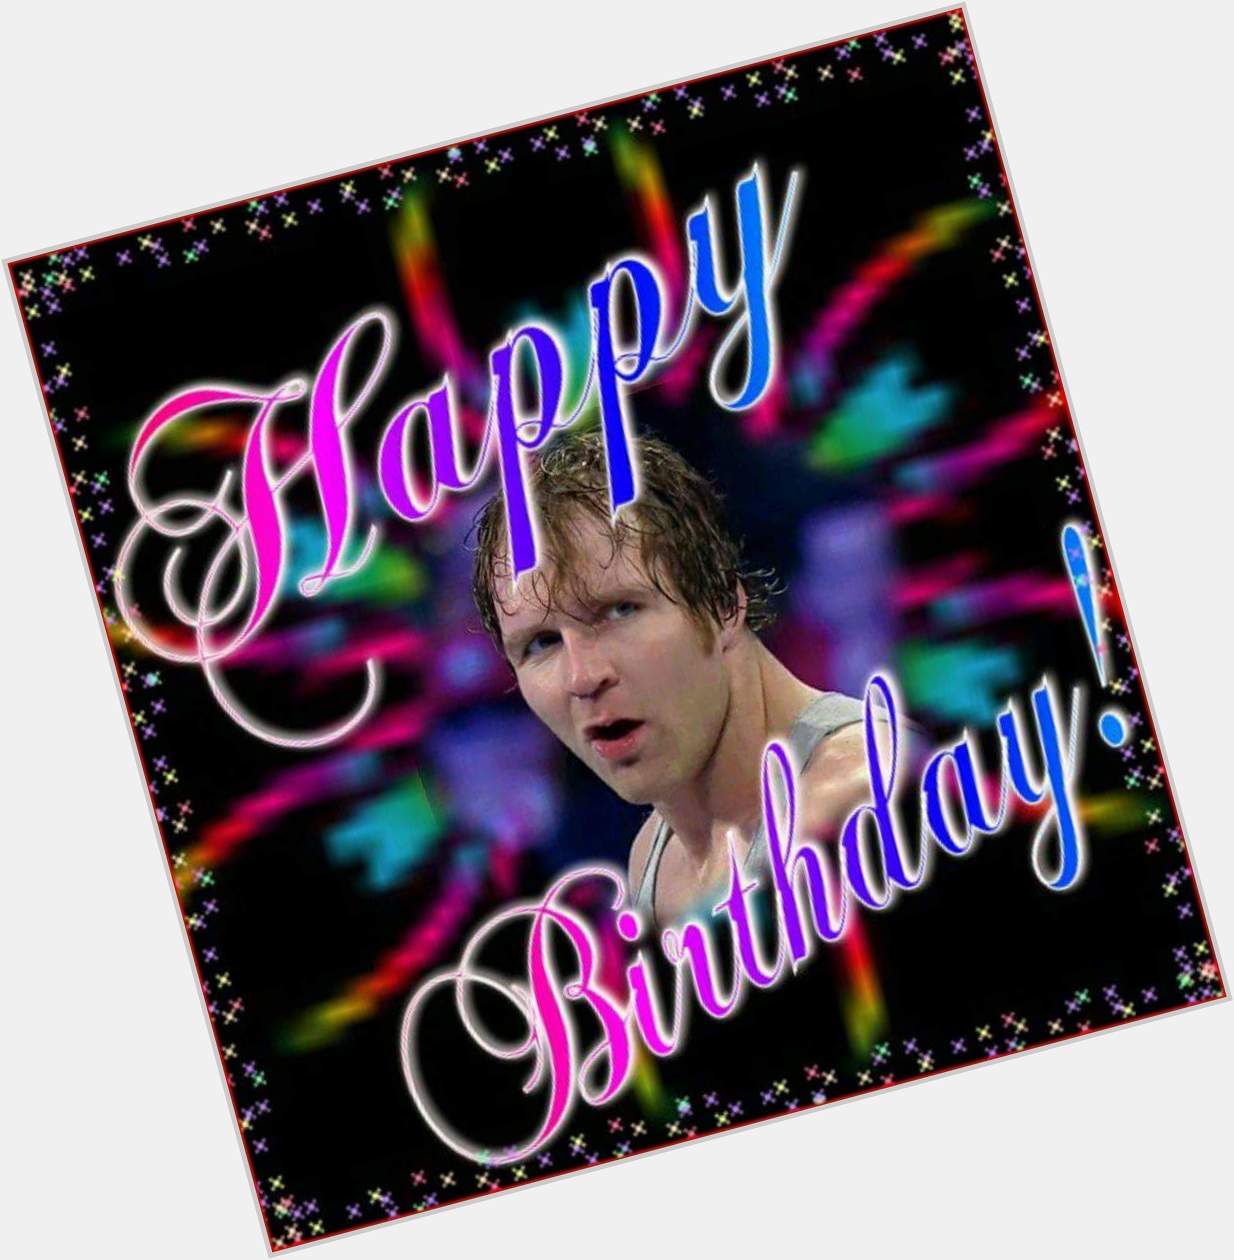 Happy 30th birthday bro Dean Ambrose 